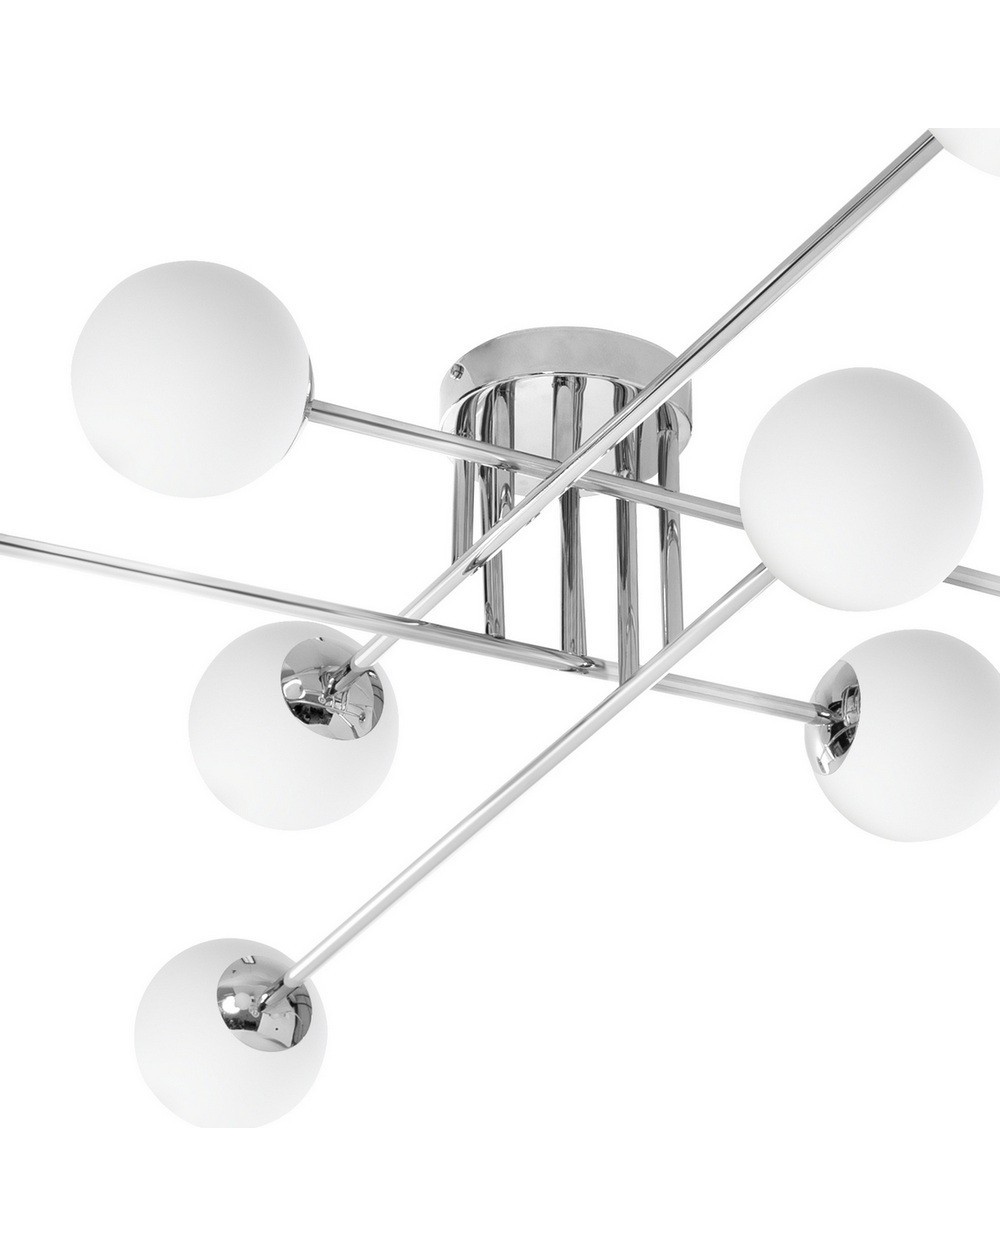 ASTRA 8 - Lampa sufitowa ośmiopunktowa srebrna